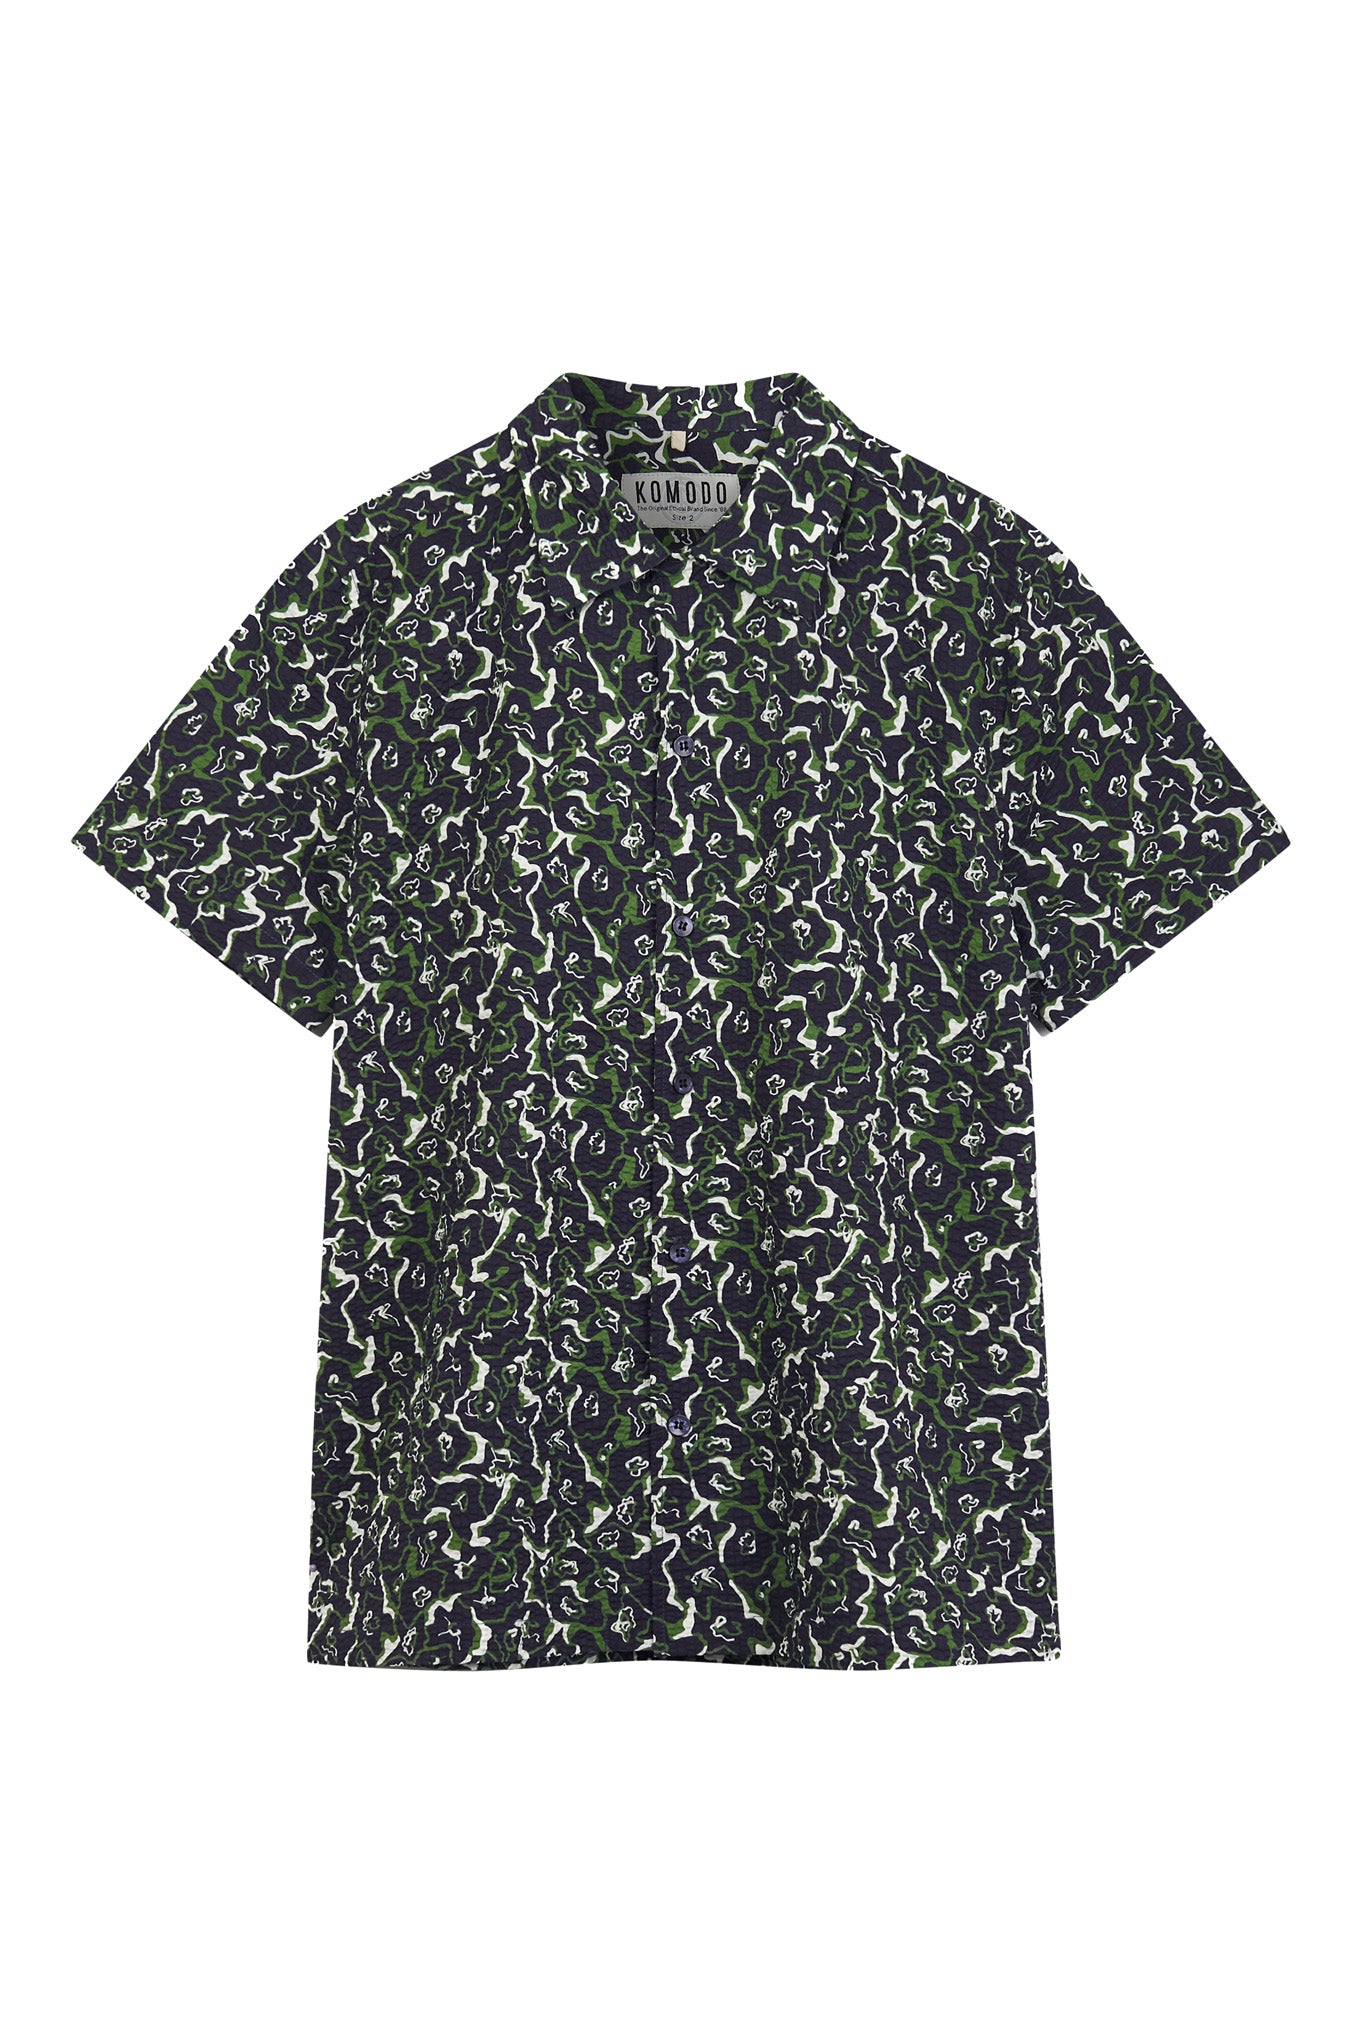 SPINDRIFT Shirt Mens - Navy Print